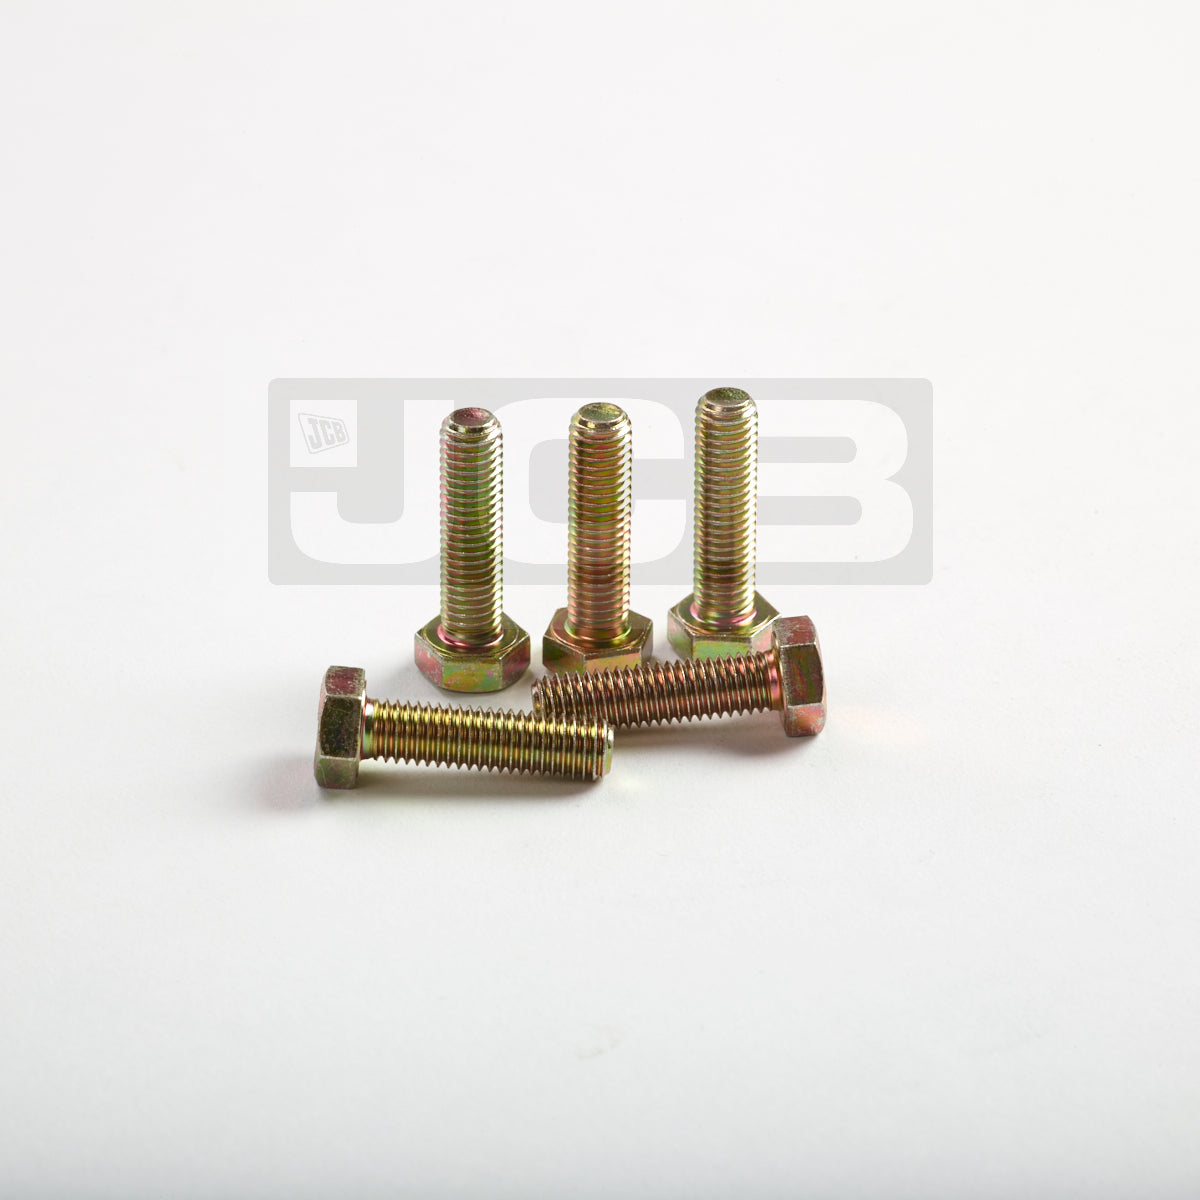 JCB Screw Set M8 x 30mm : 1315/0308Z (Pack of 5)